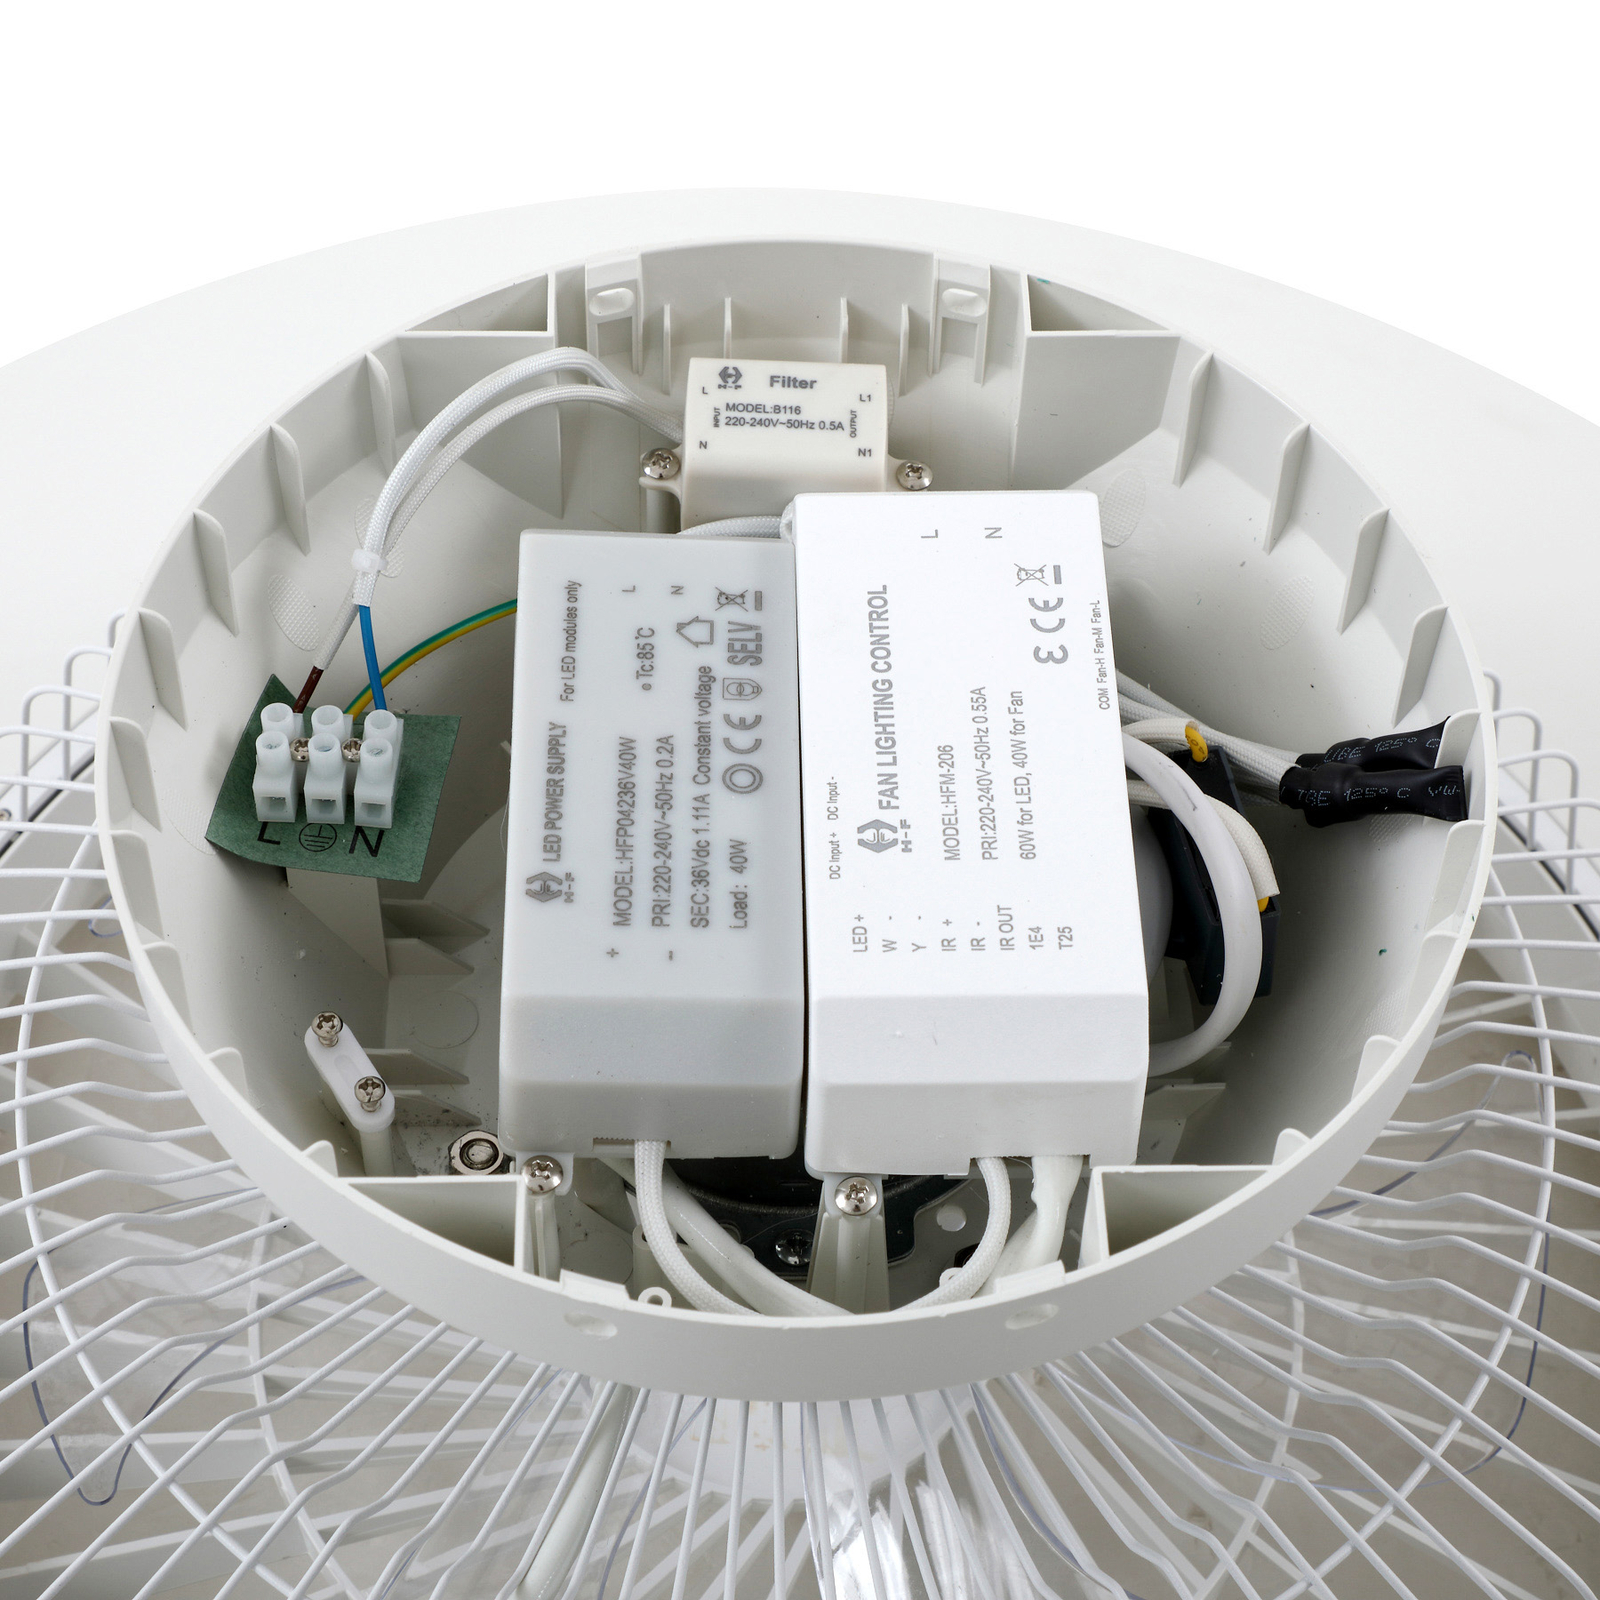 Lindby Smart LED-Deckenventilator Paavo, weiß, leise, Tuya